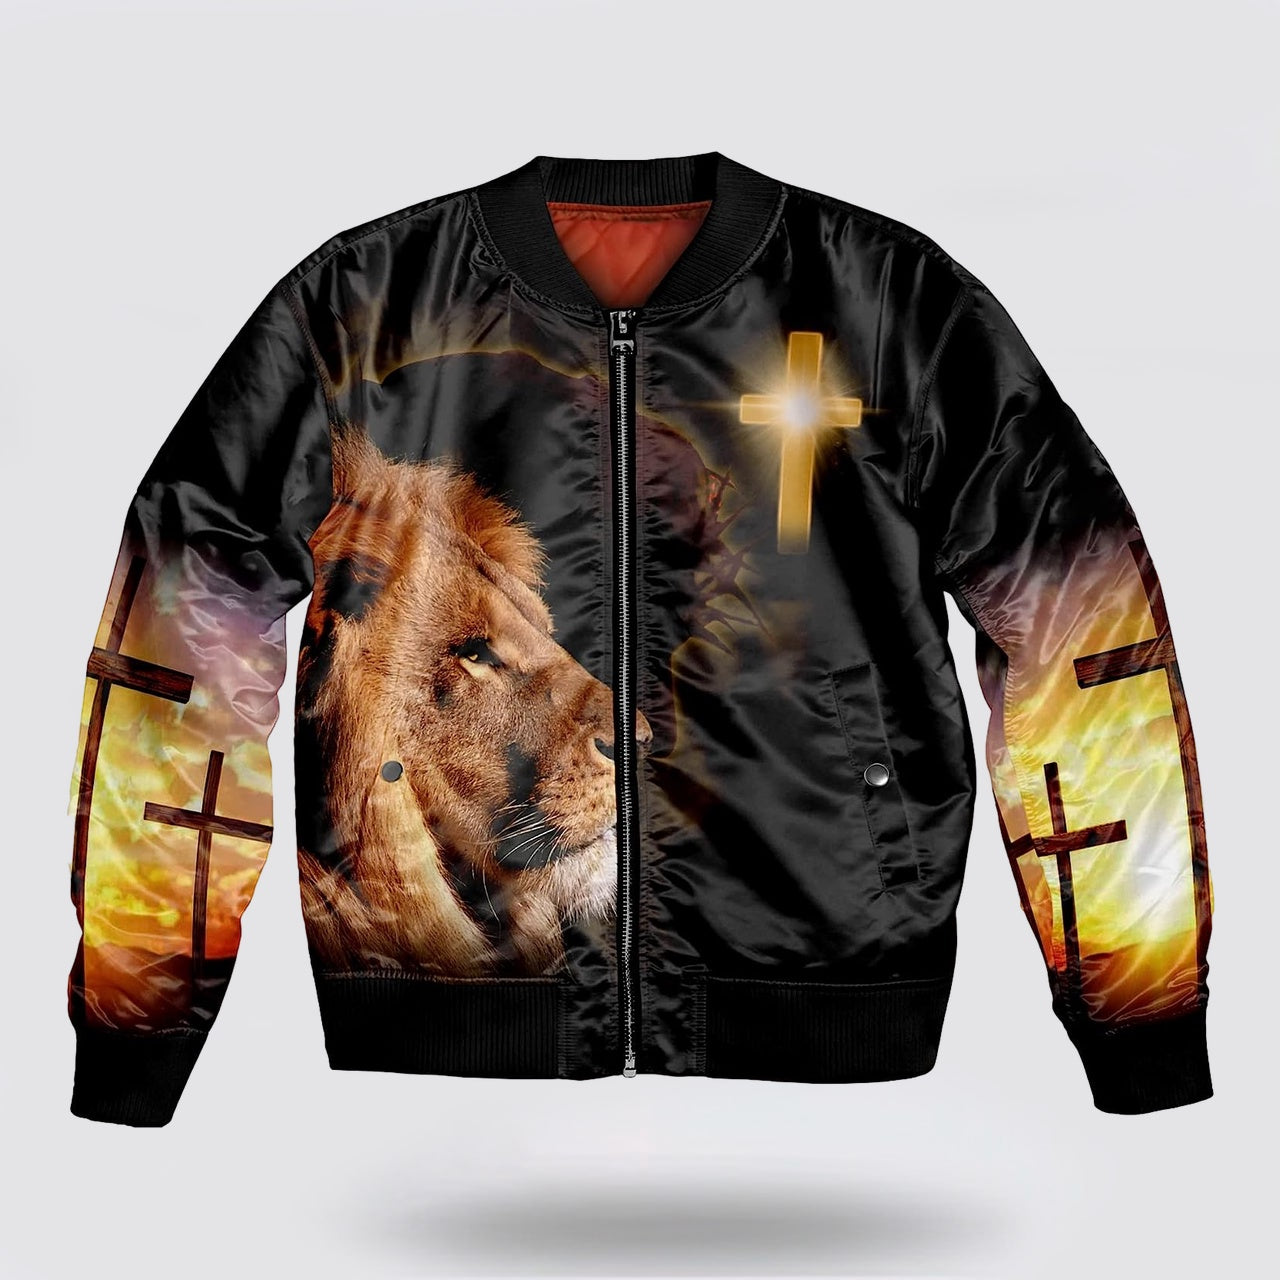 Jesus Christ Lion Cross A Child Of God Bomber Jacket - Jesus Shirt for Men Women